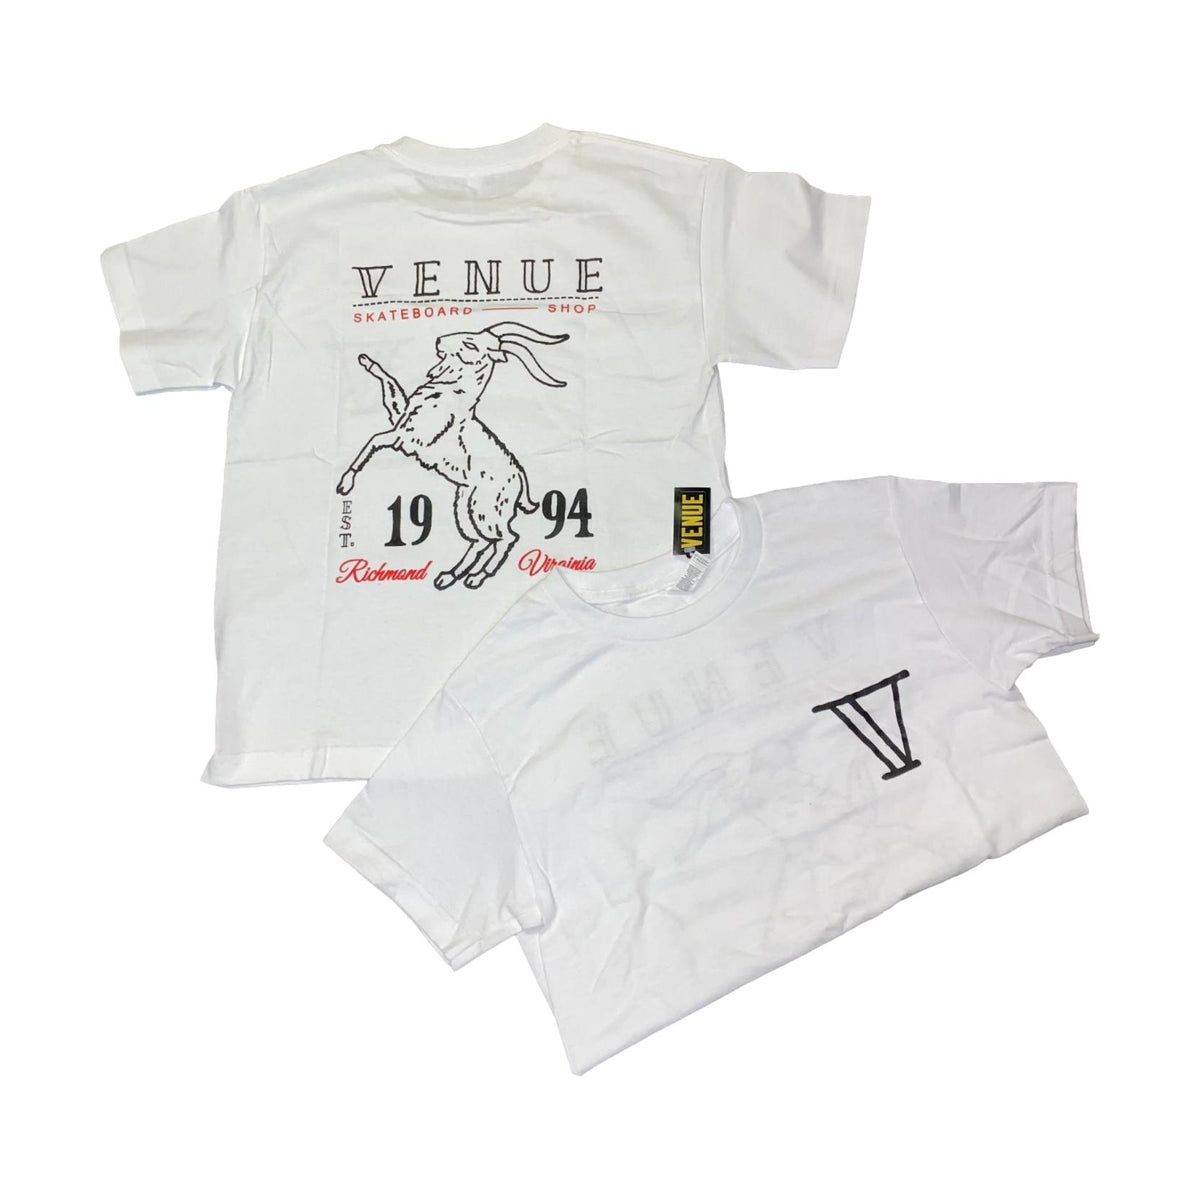 Venue Goat T-Shirt Youth - White